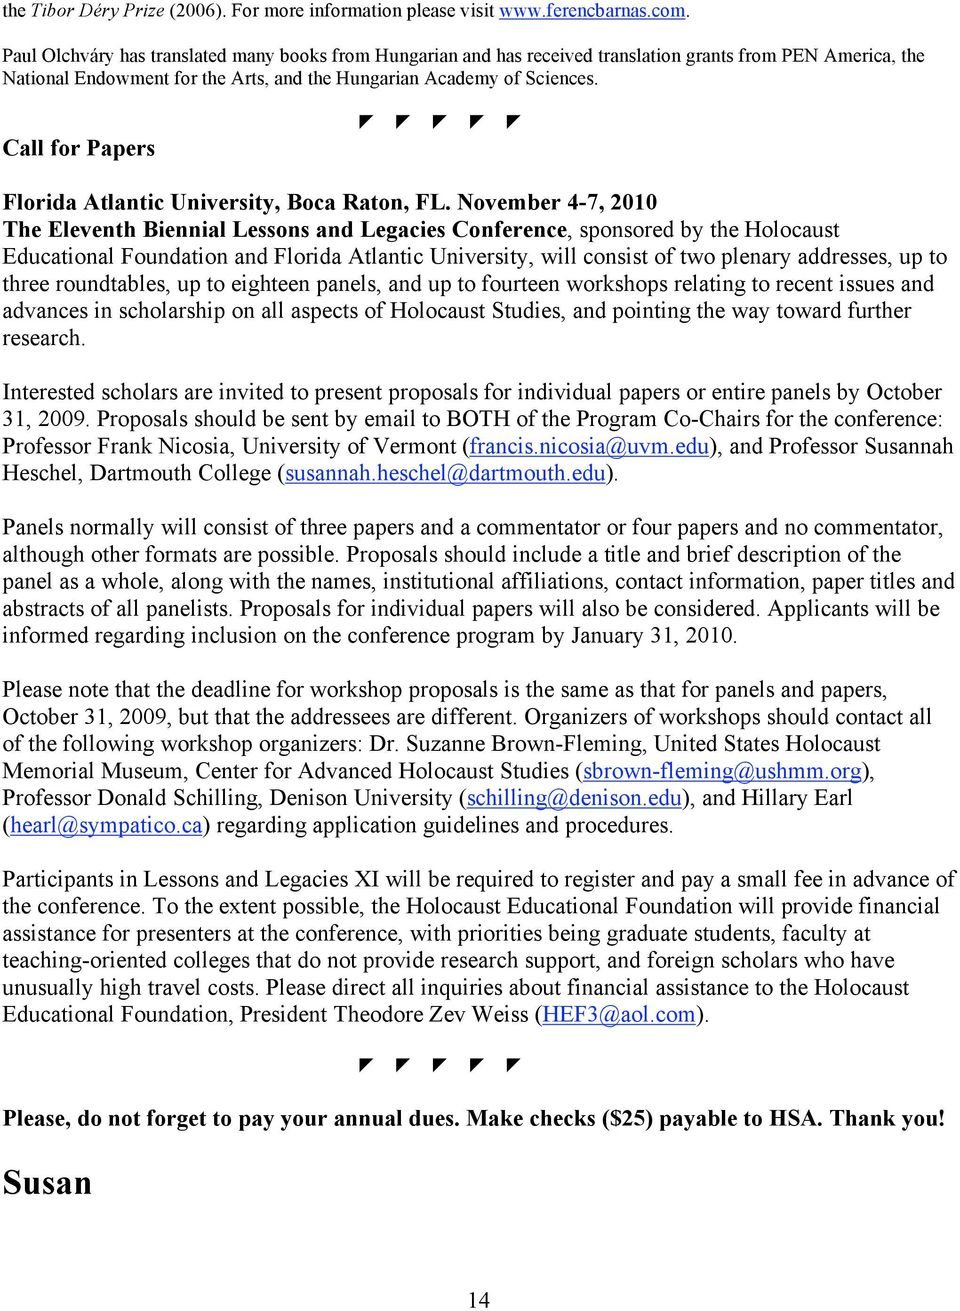 Call for Papers Florida Atlantic University, Boca Raton, FL.